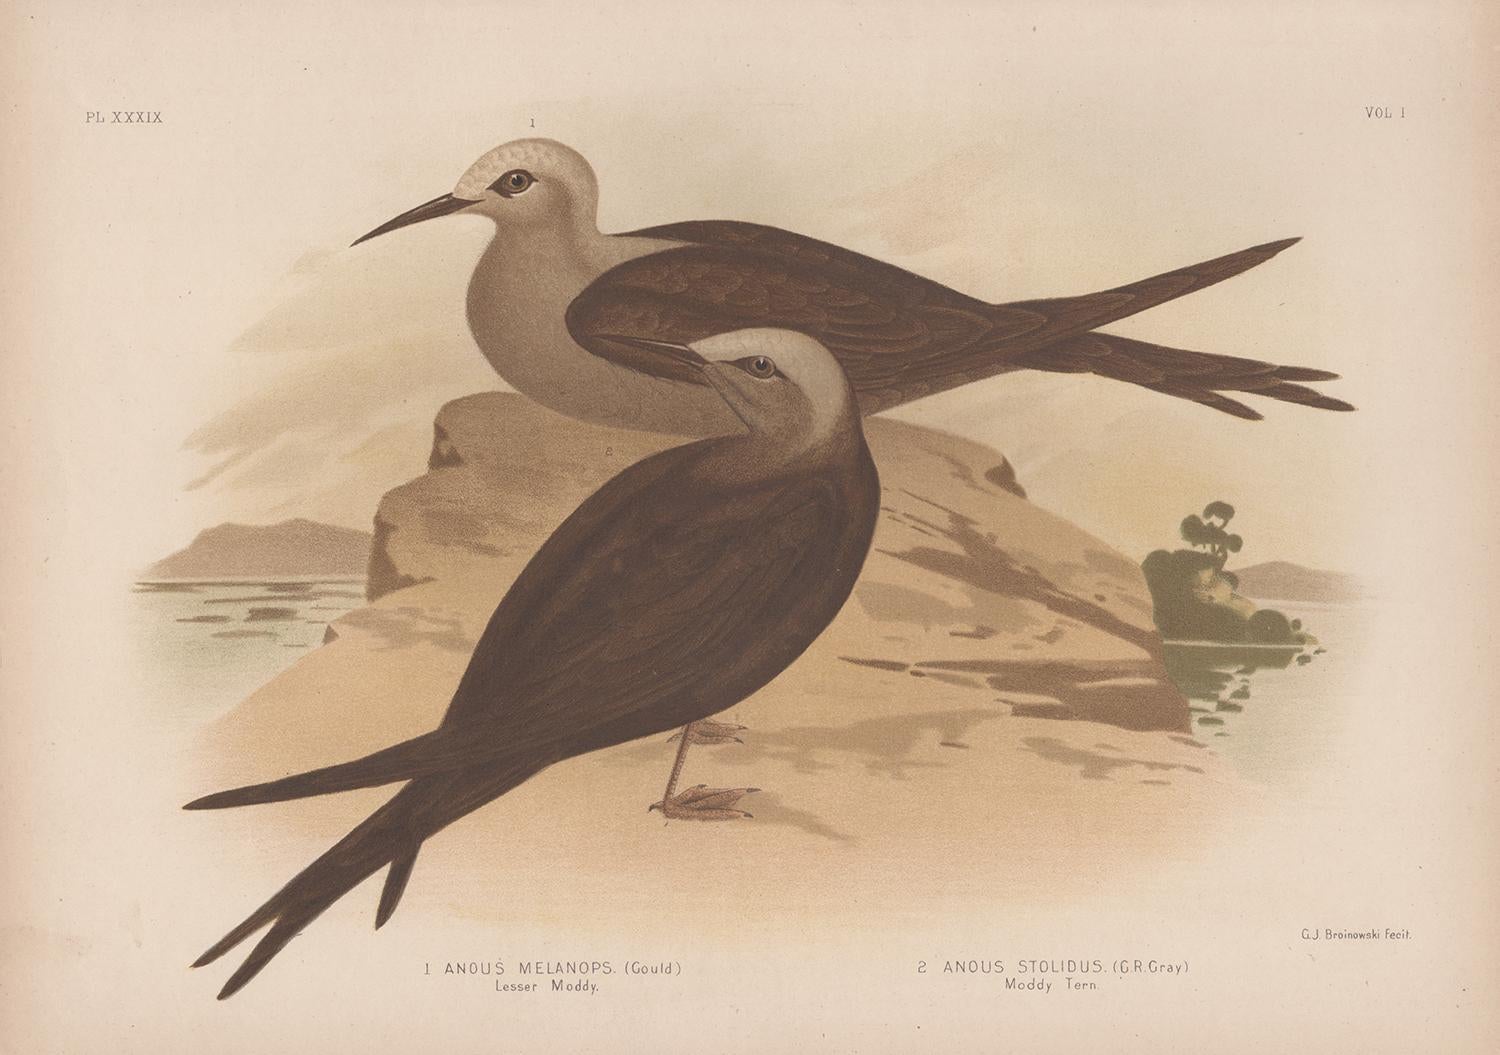 Lesser Moddy et Moddy Tern, ancien tirage chromolithographie d'oiseau de mer, 1889